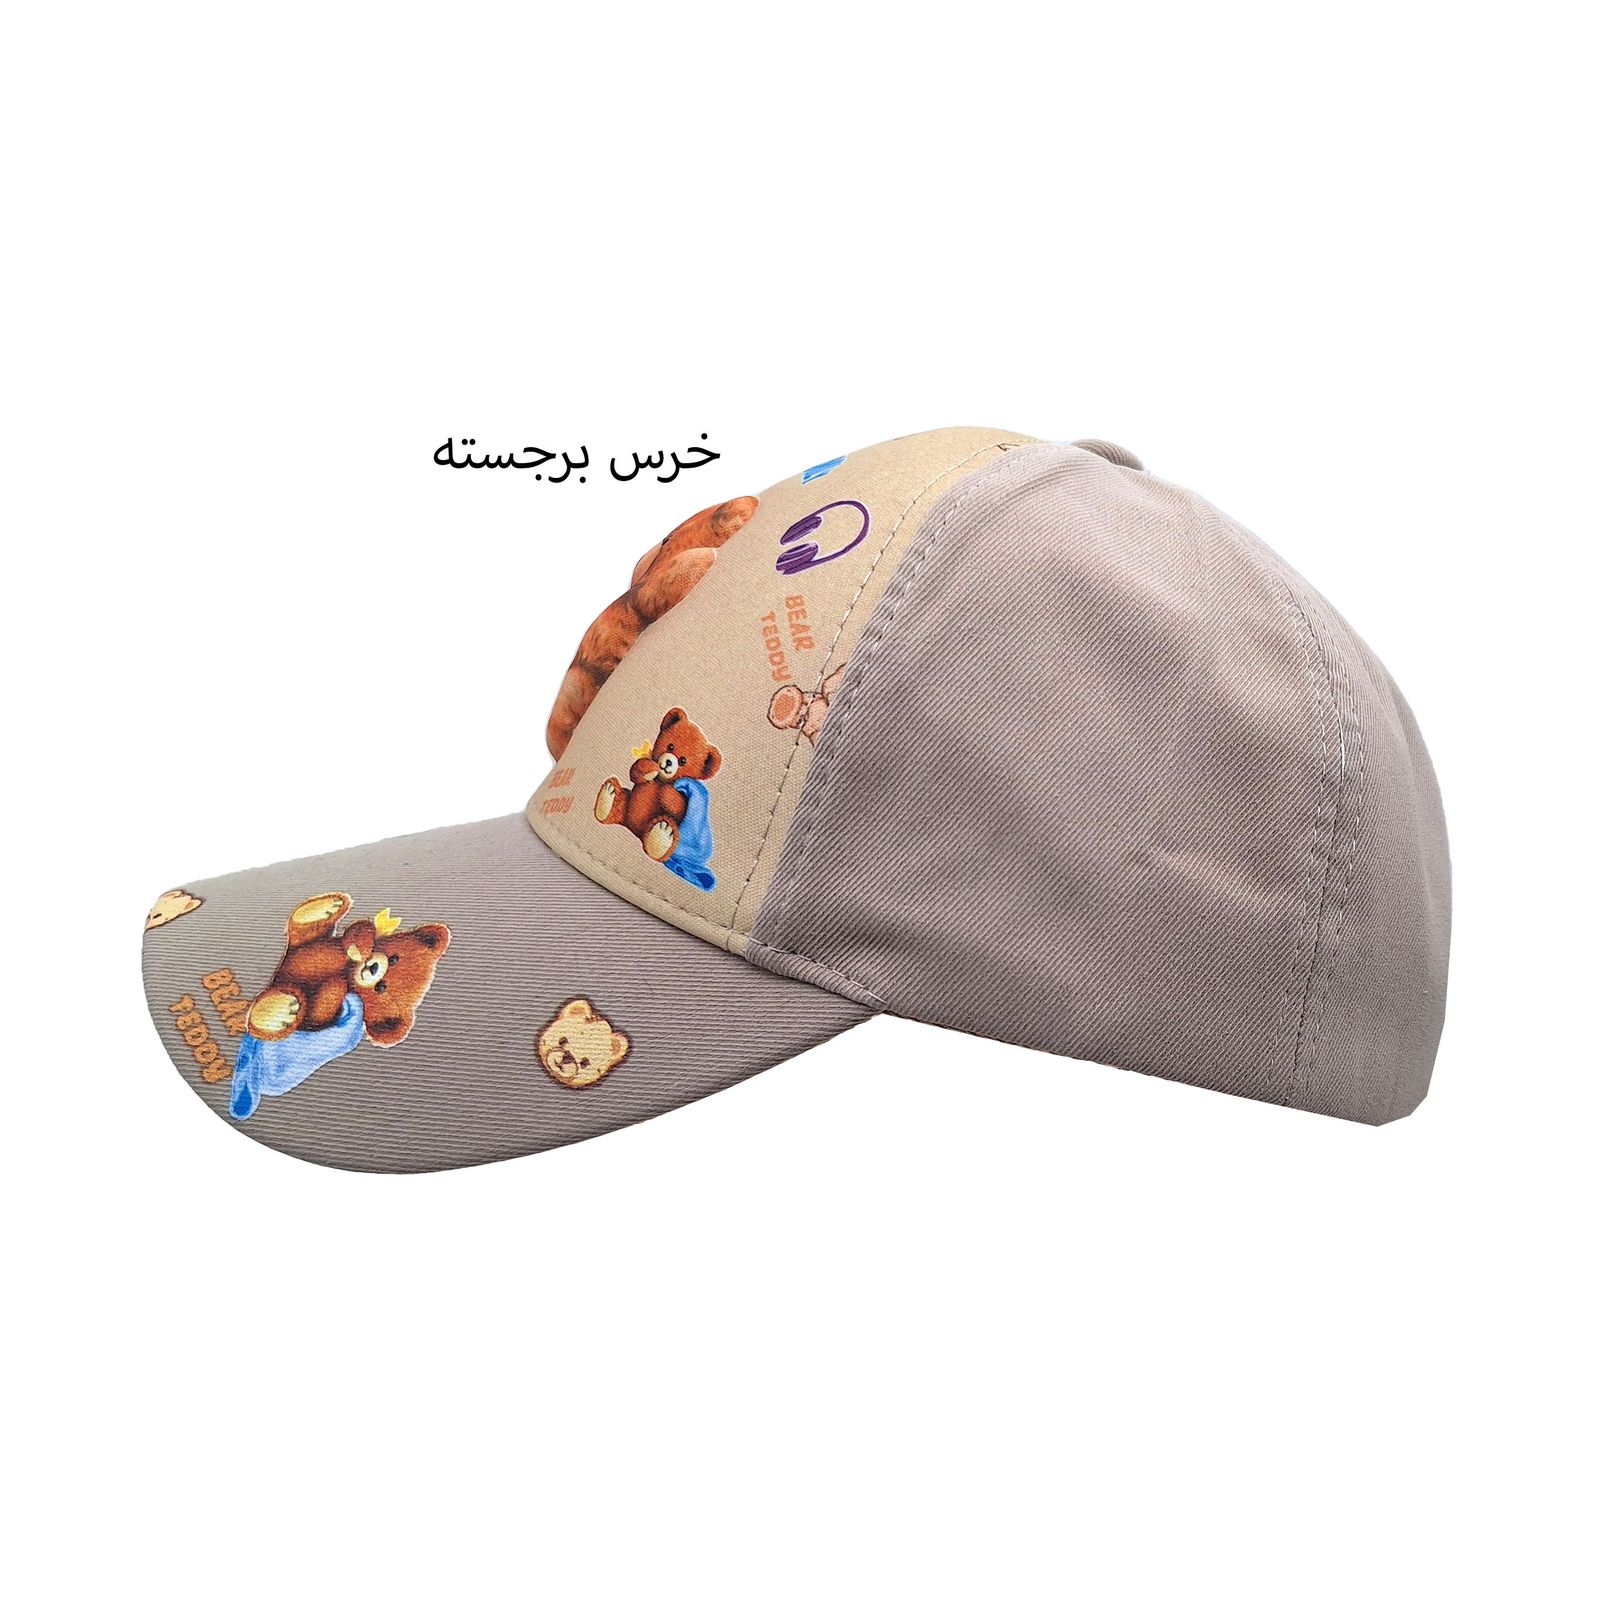  کلاه کپ پسرانه مدل خرس برجسته کد 1143 رنگ کرم  -  - 2